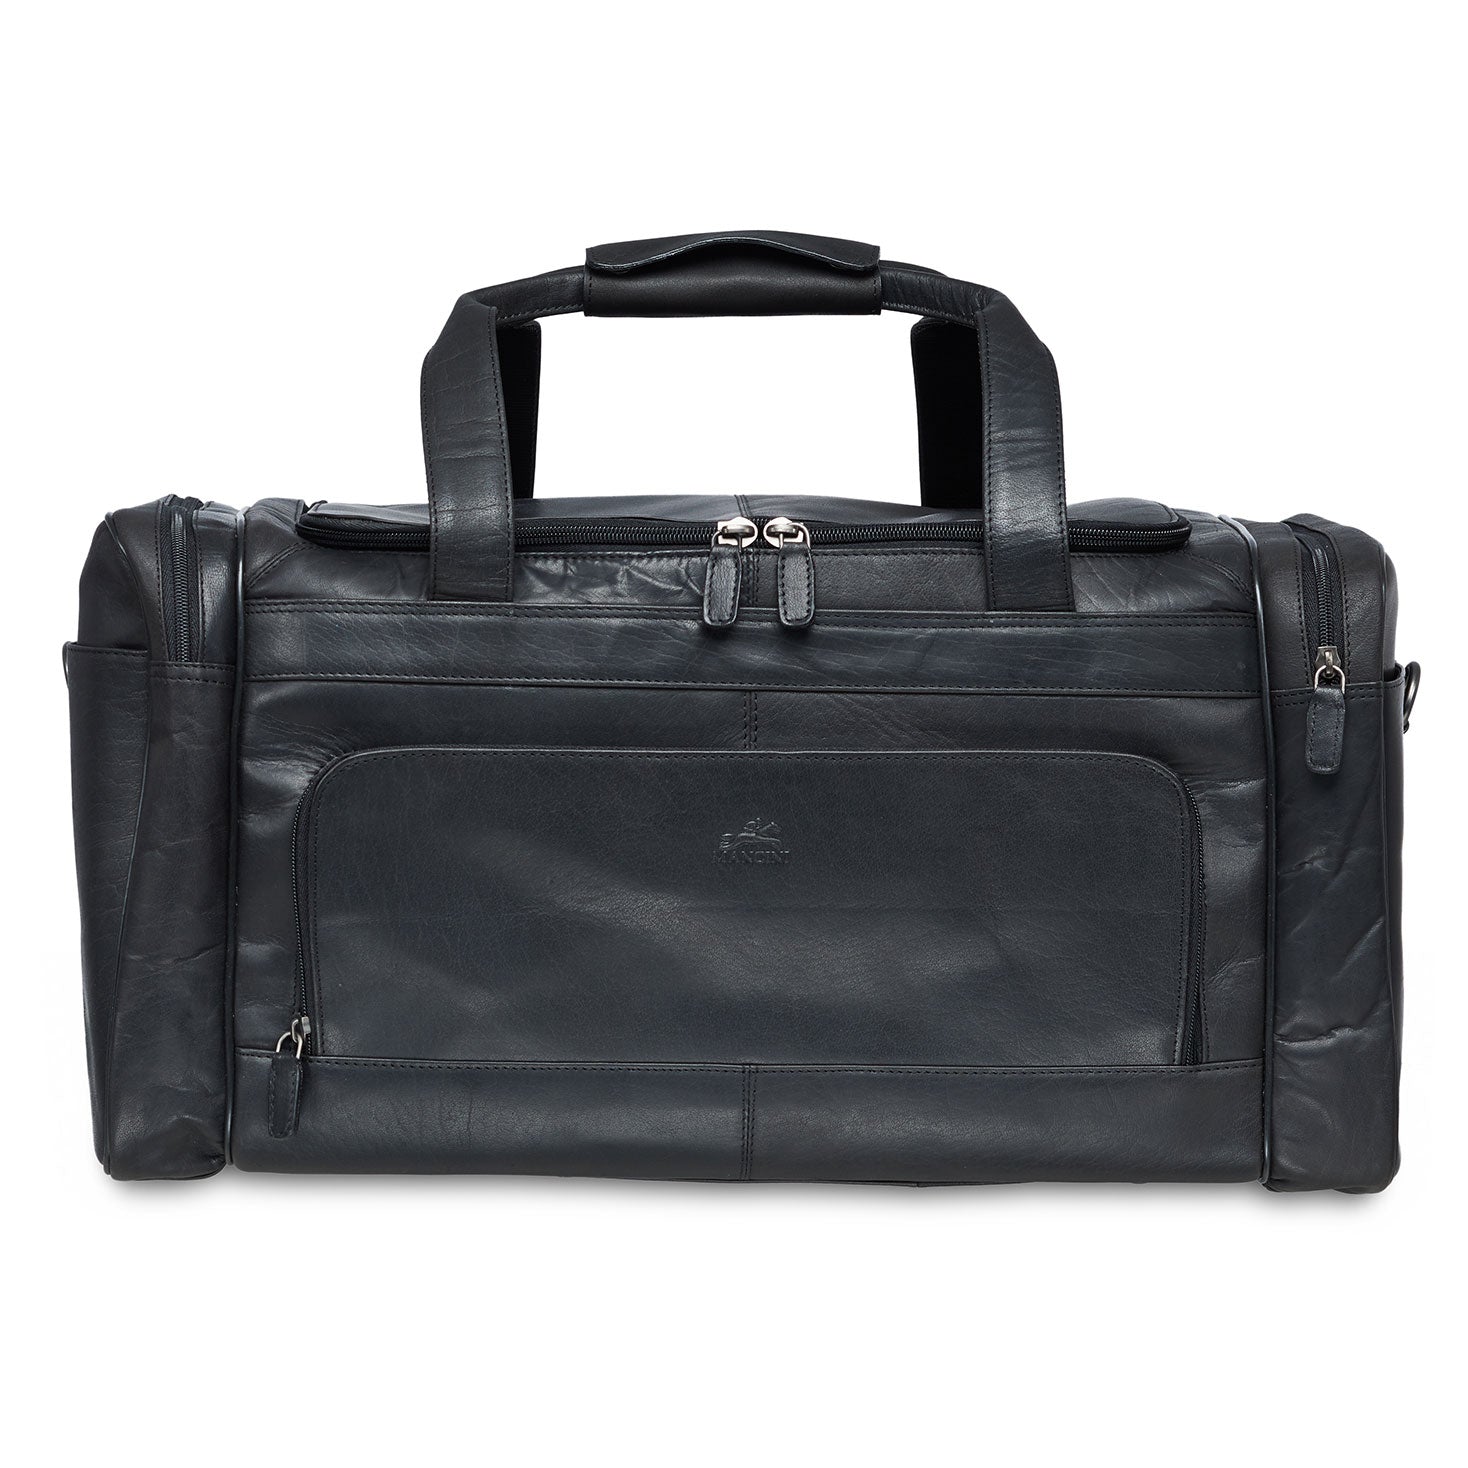 Mancini Leather Carry-on Duffle Bag, 20" x 10.75" x 10.75", Black